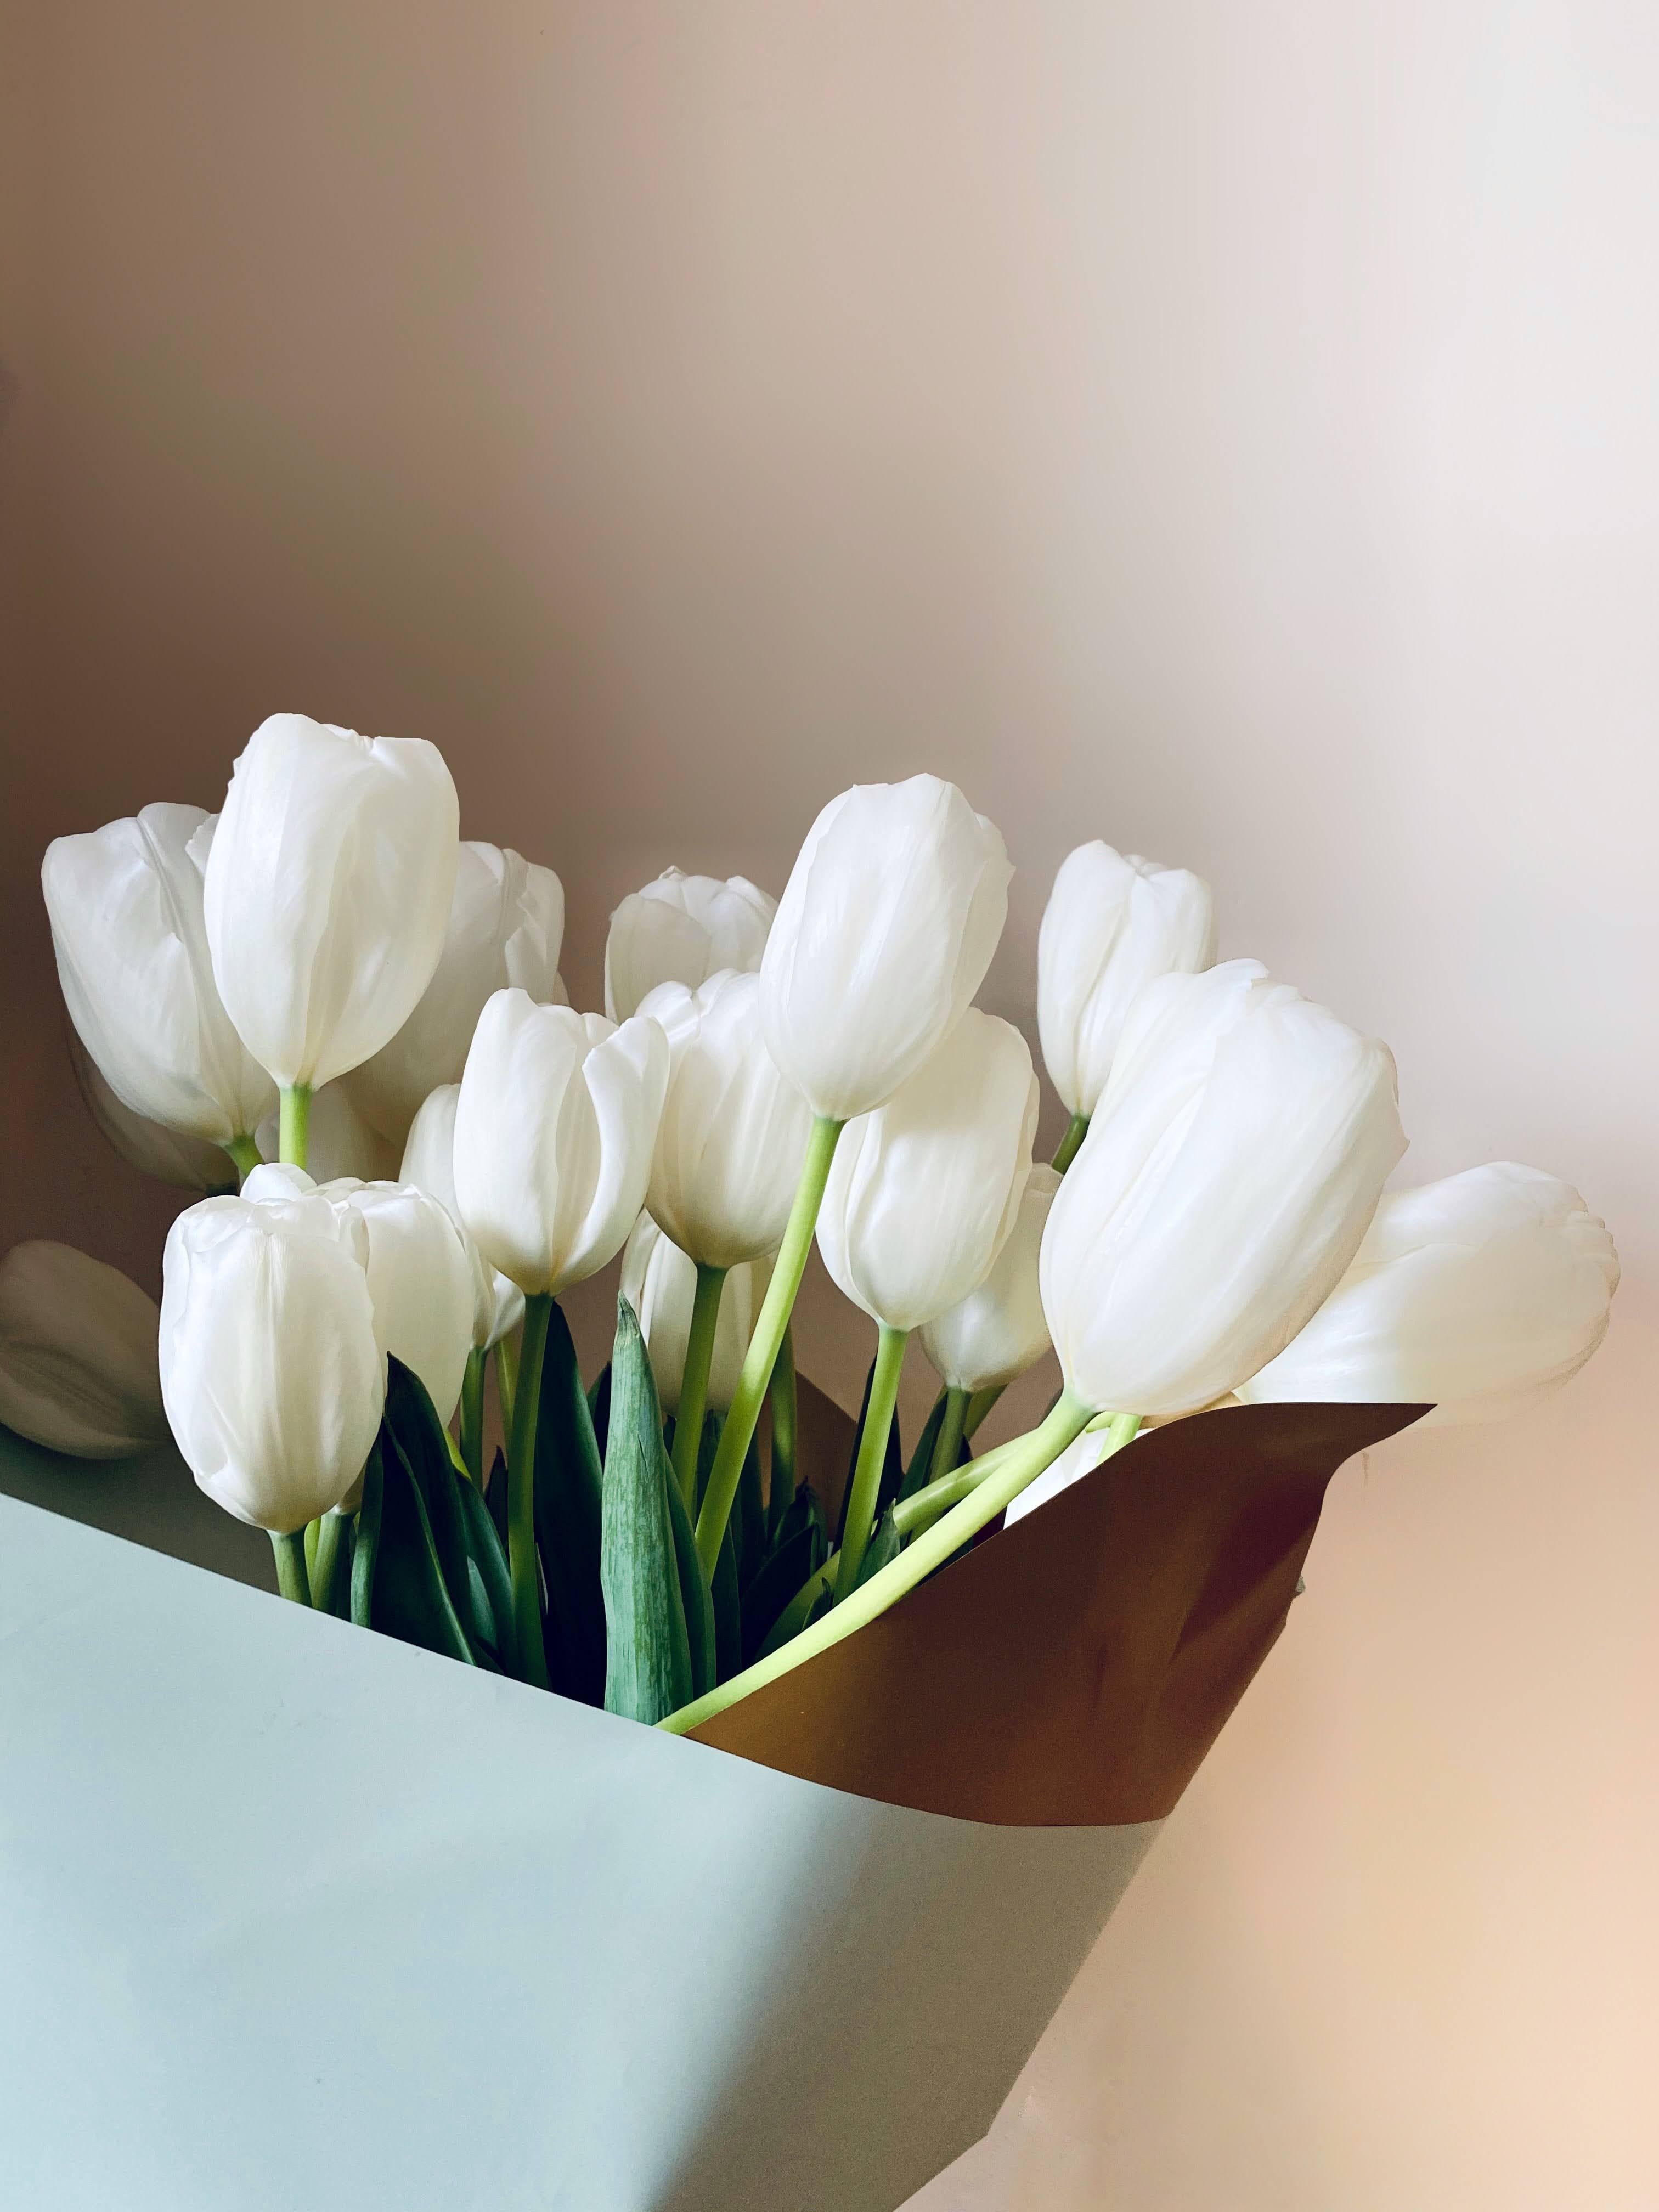 White Tulips Wrapped in Paper | Photo by Loredana Filip via Unsplash